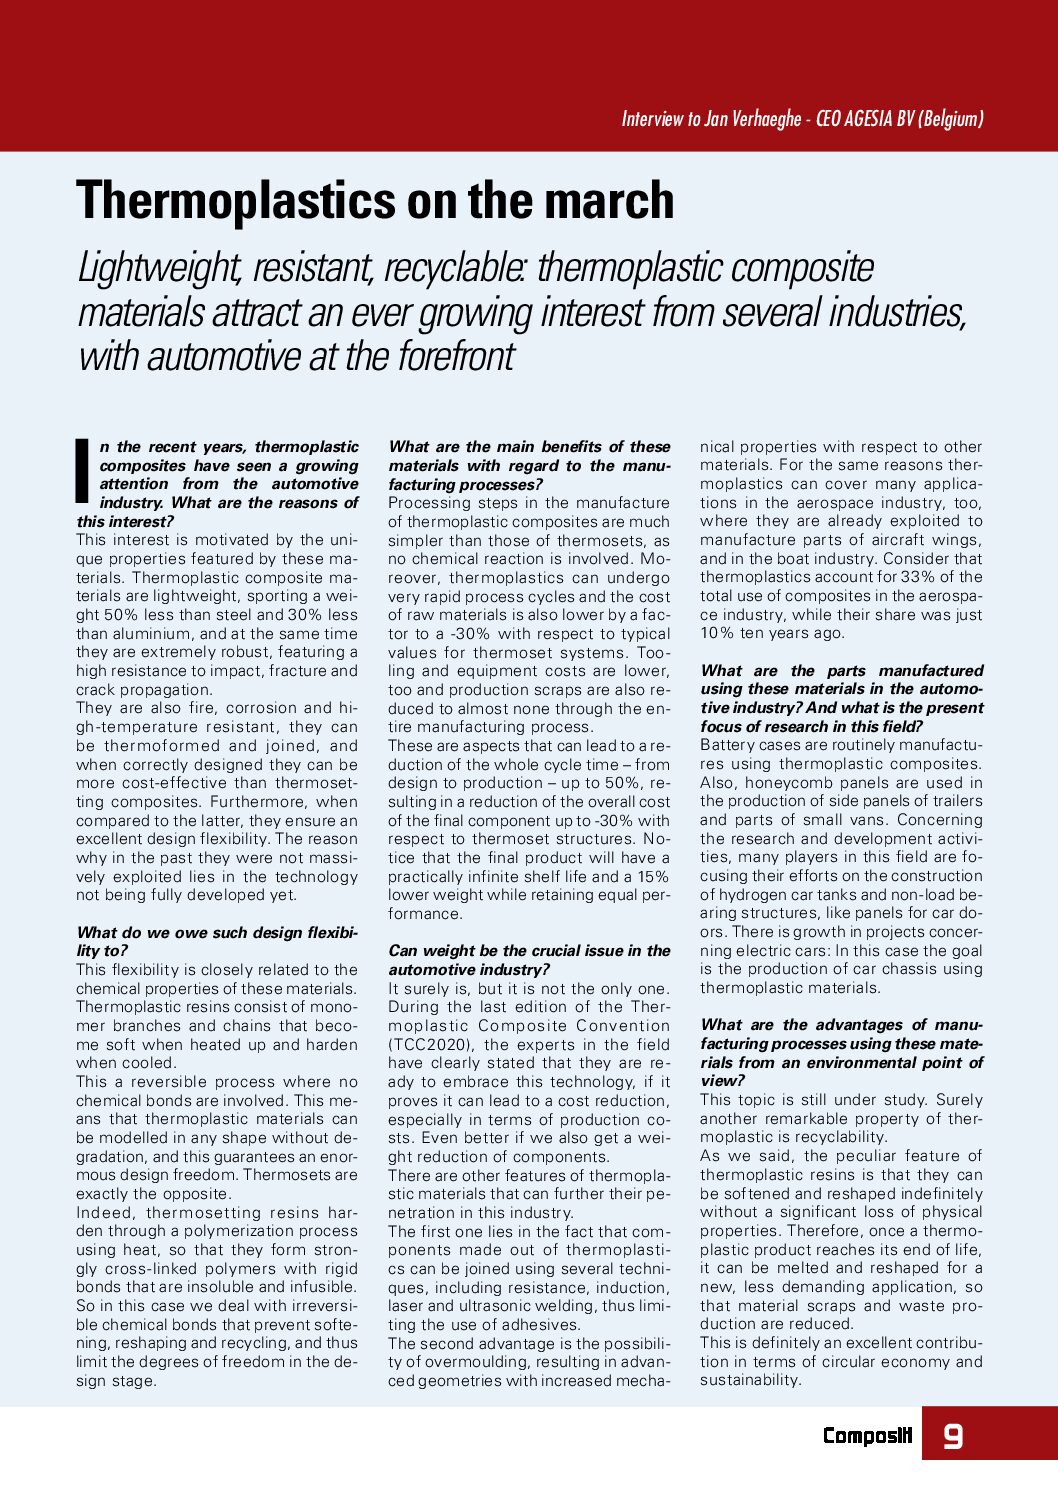 Thermoplastics on the march – Interview Compositi Magazine